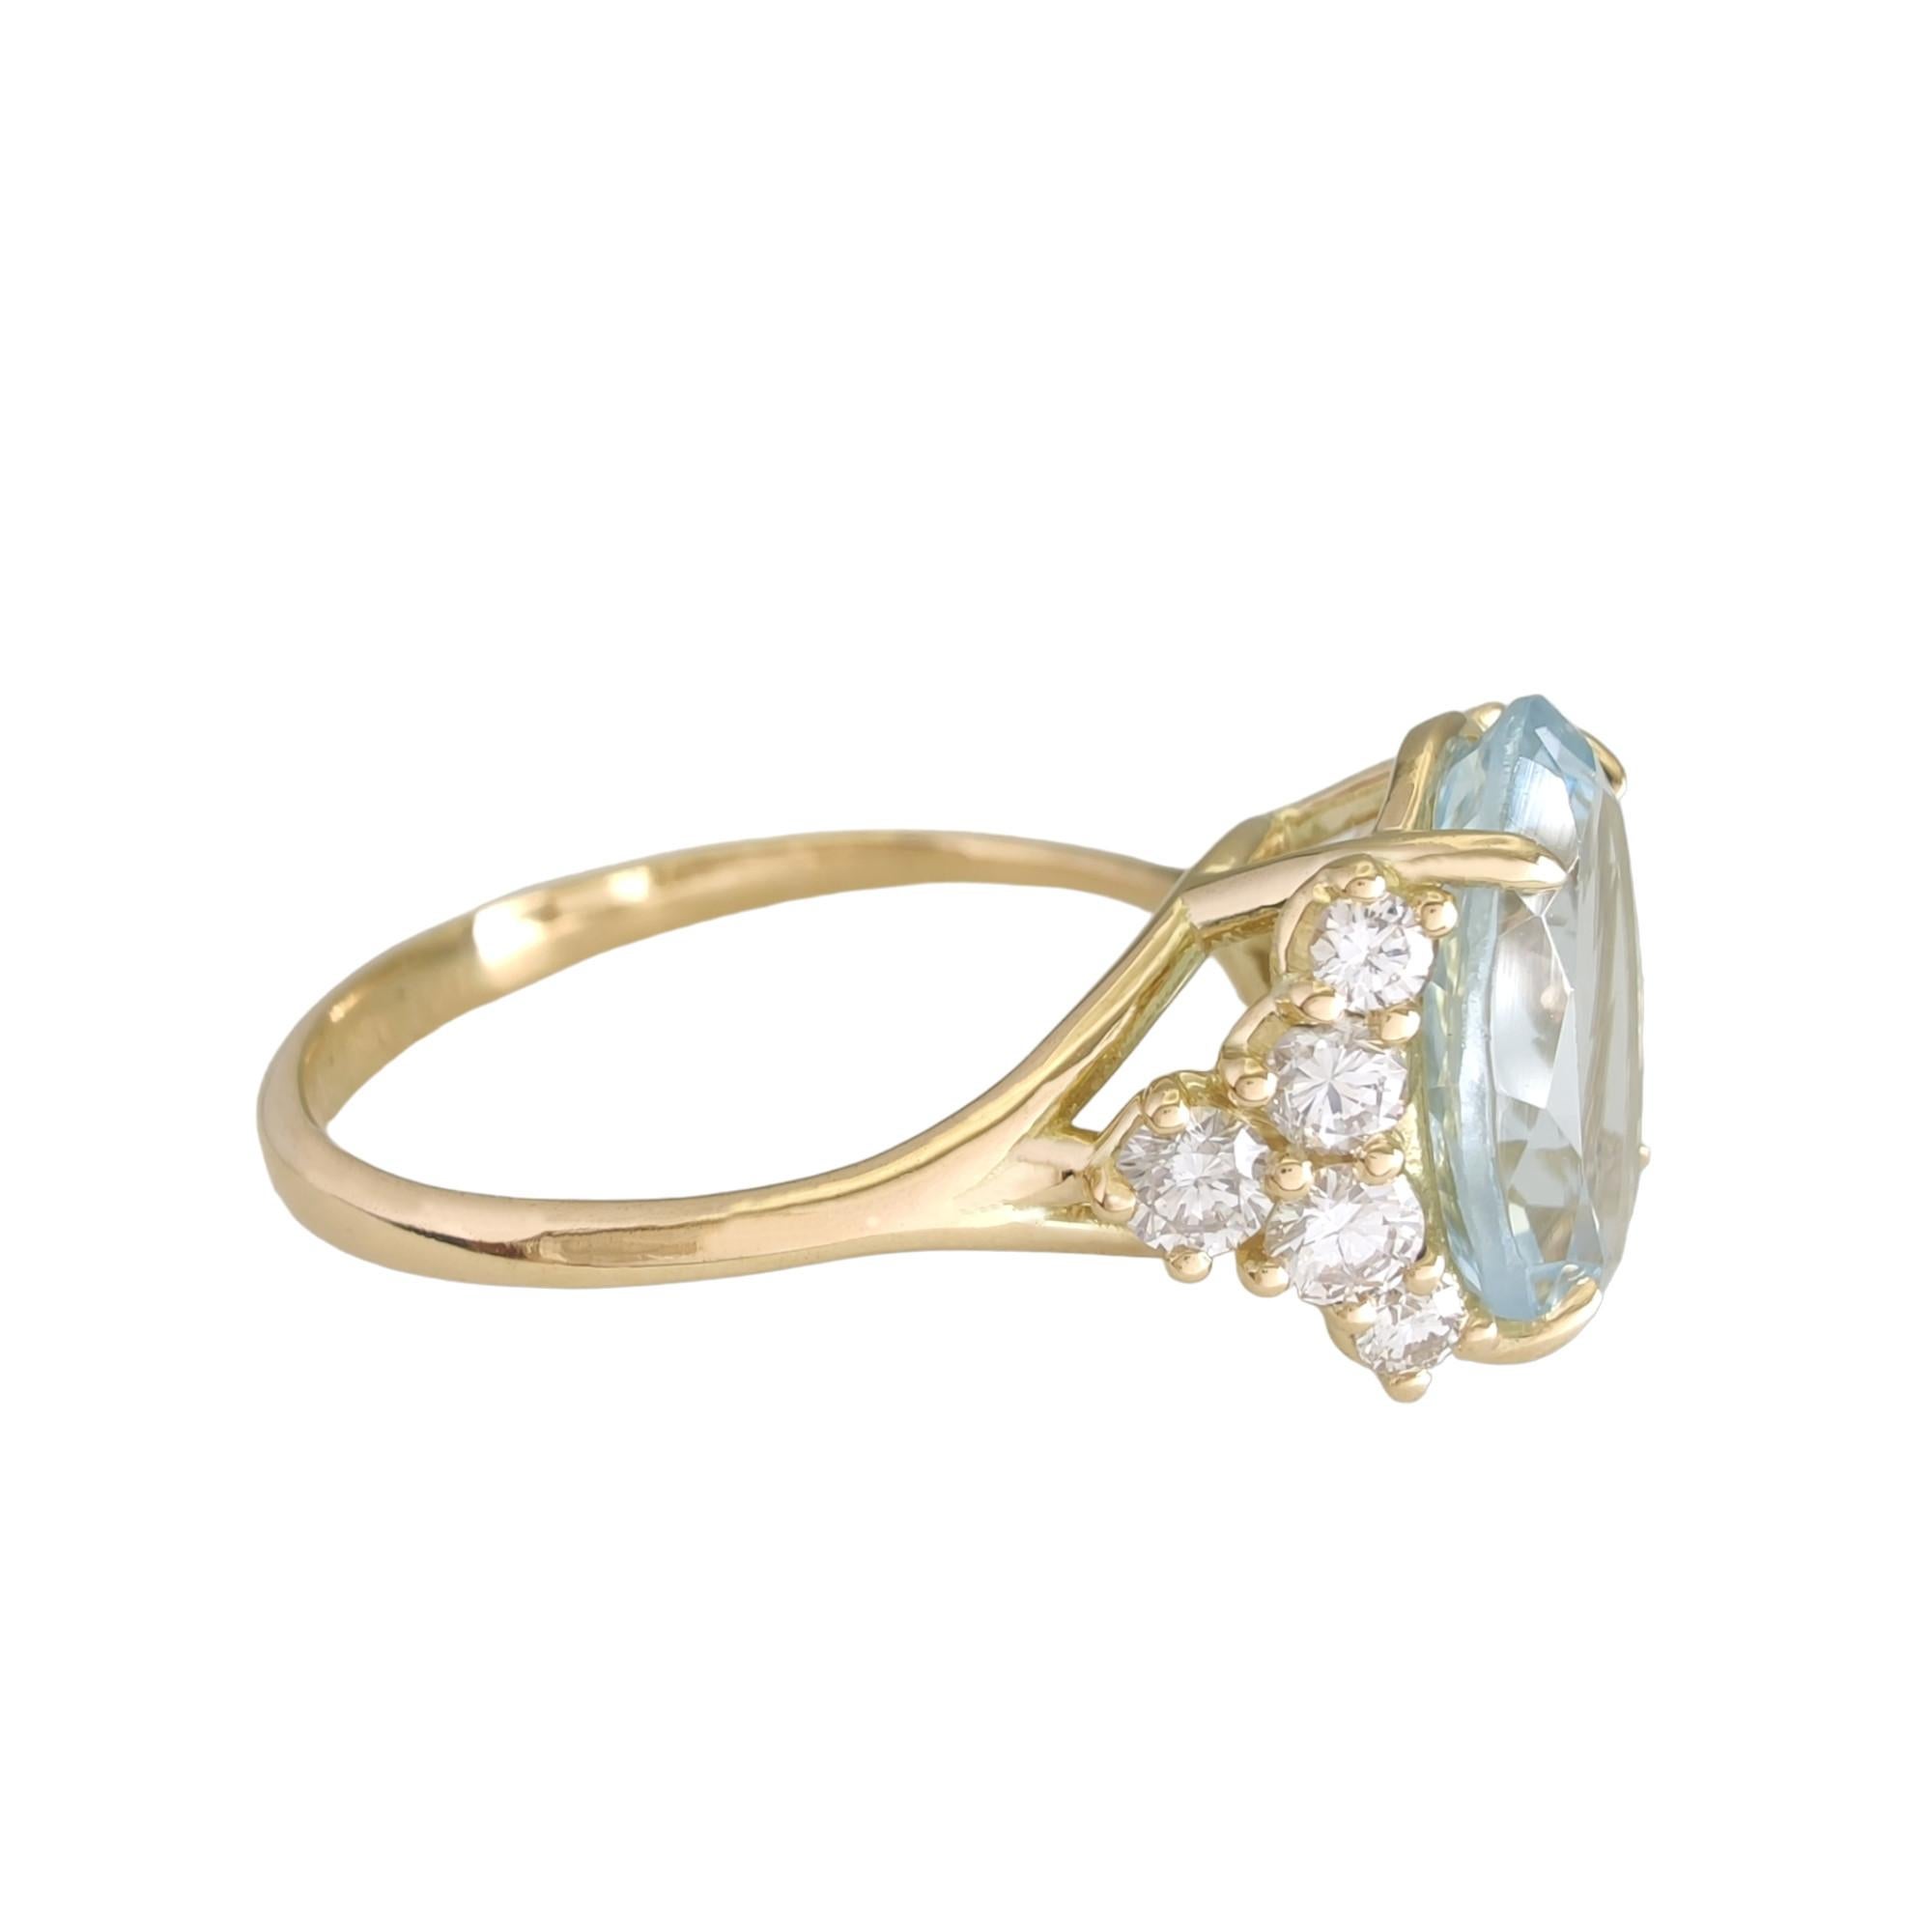 2.69 Carat Aquamarine and 0.25 Carat Diamond Ring in 18k Yellow Gold For Sale 3